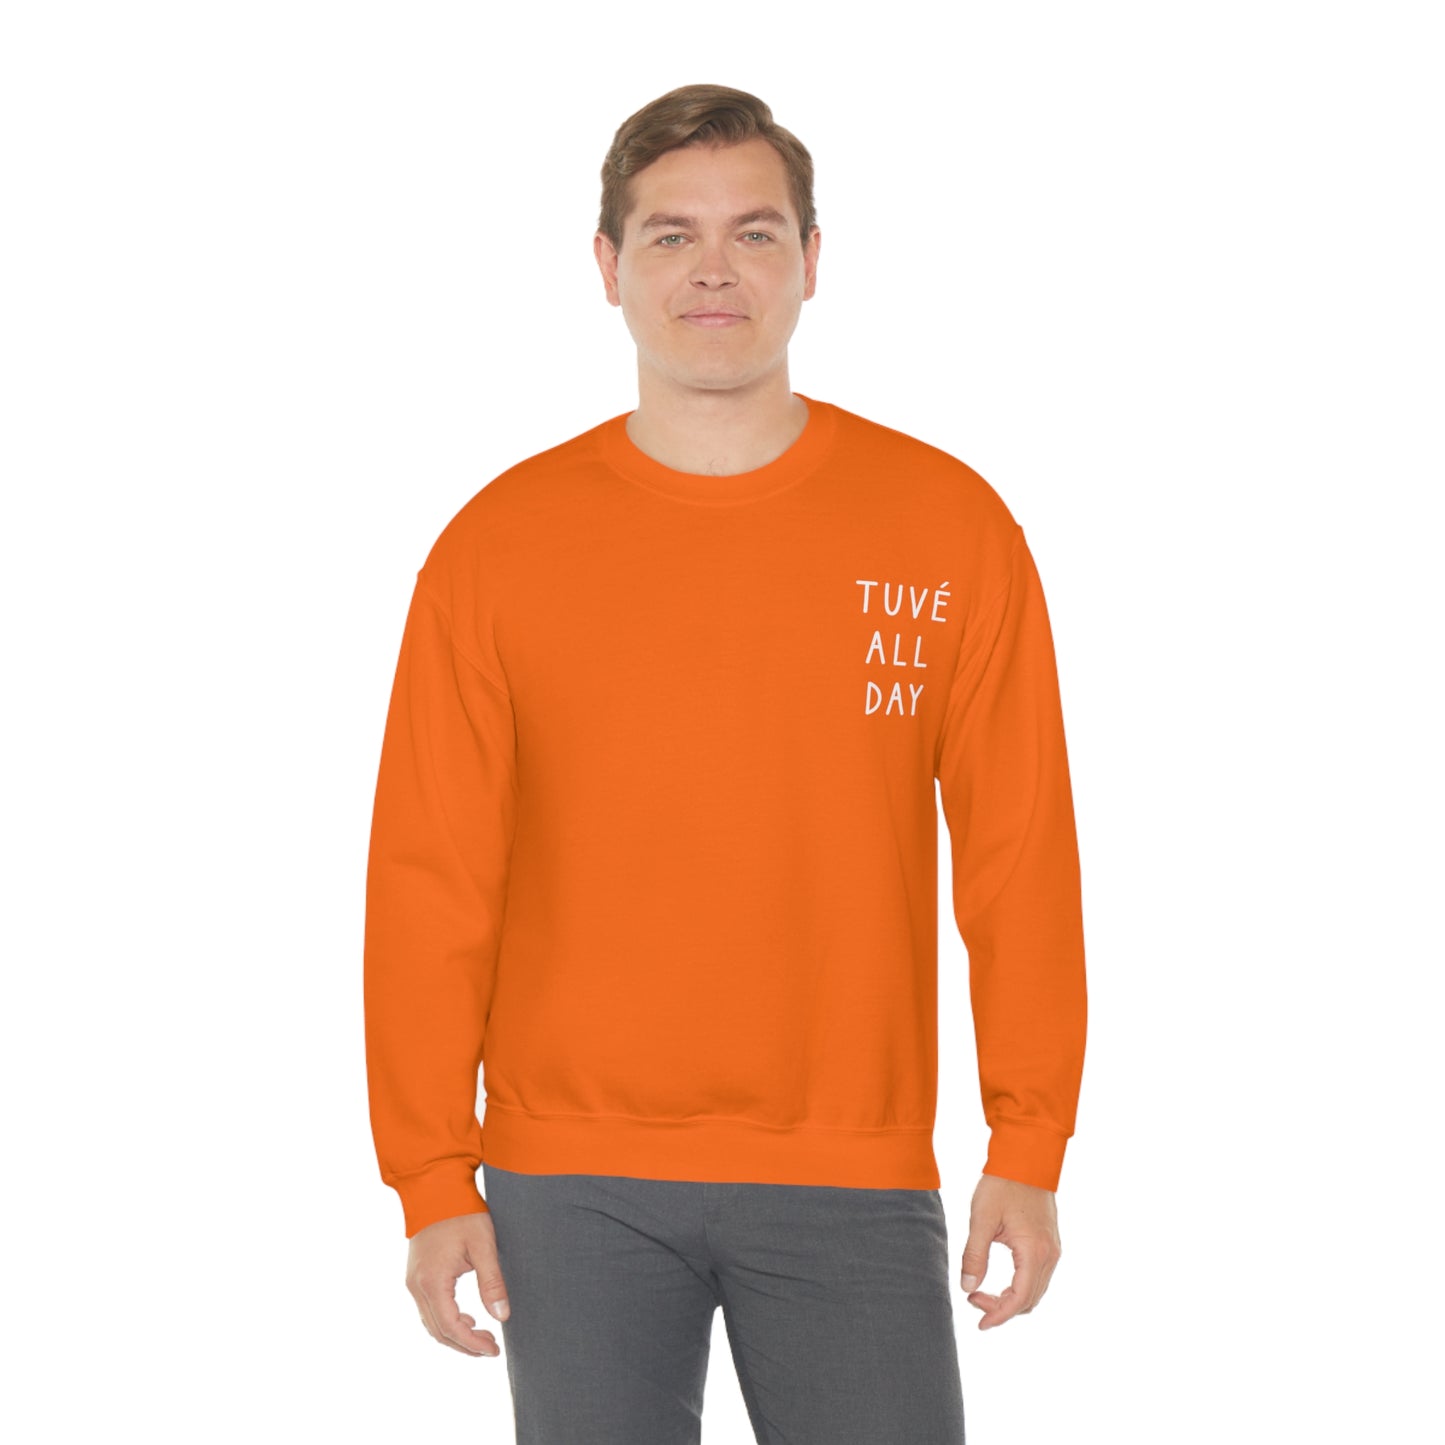 Tuvé All Day Crewneck Sweatshirt